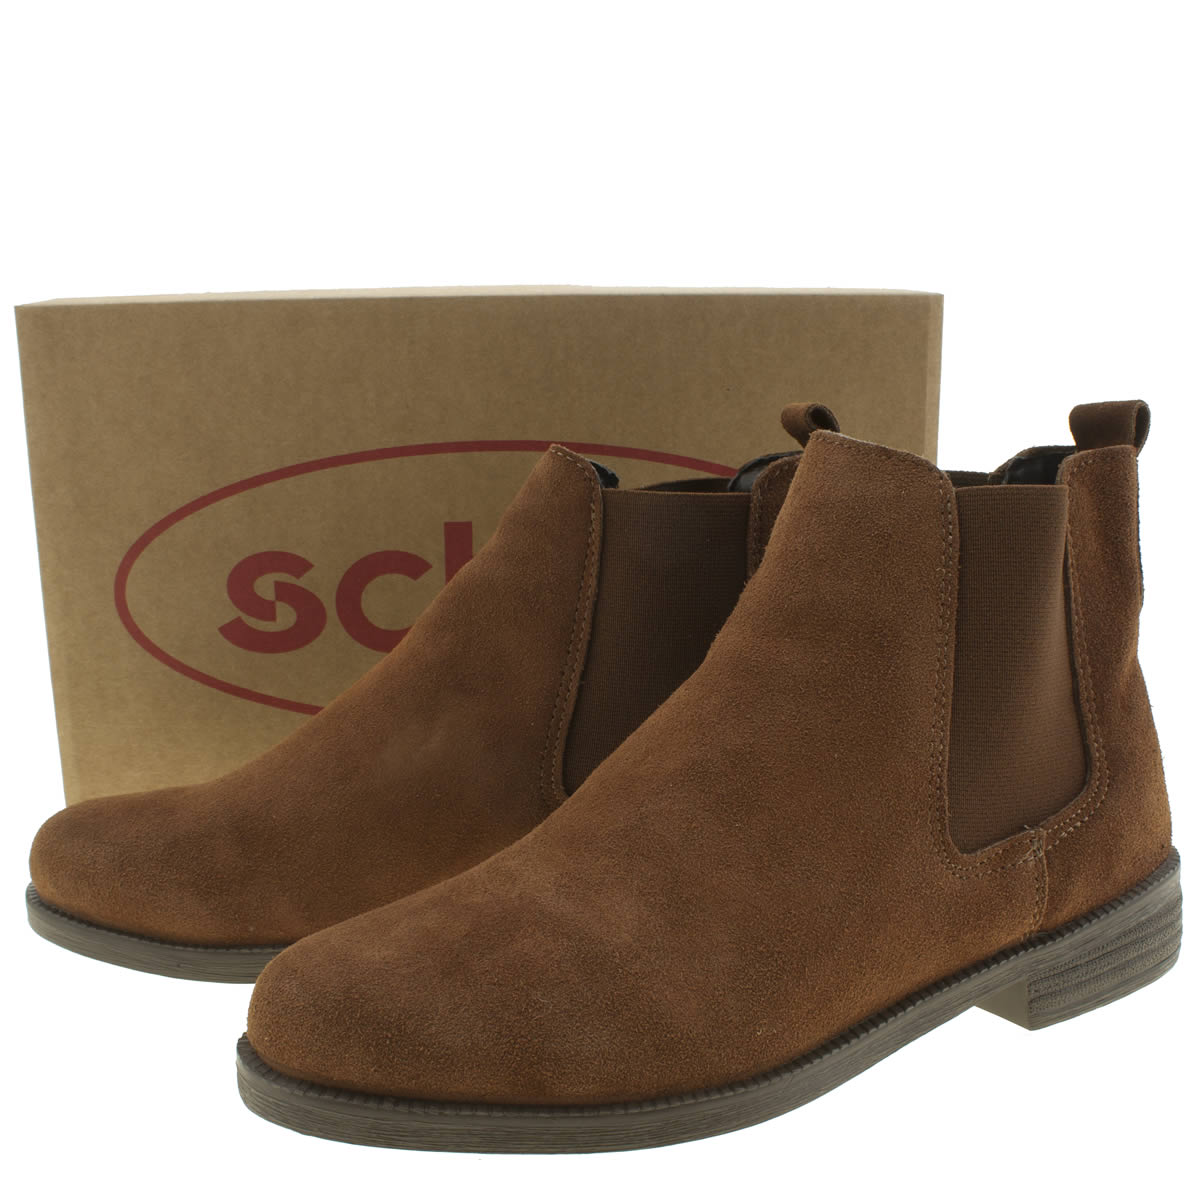 Schuh Tan Boots £45.00